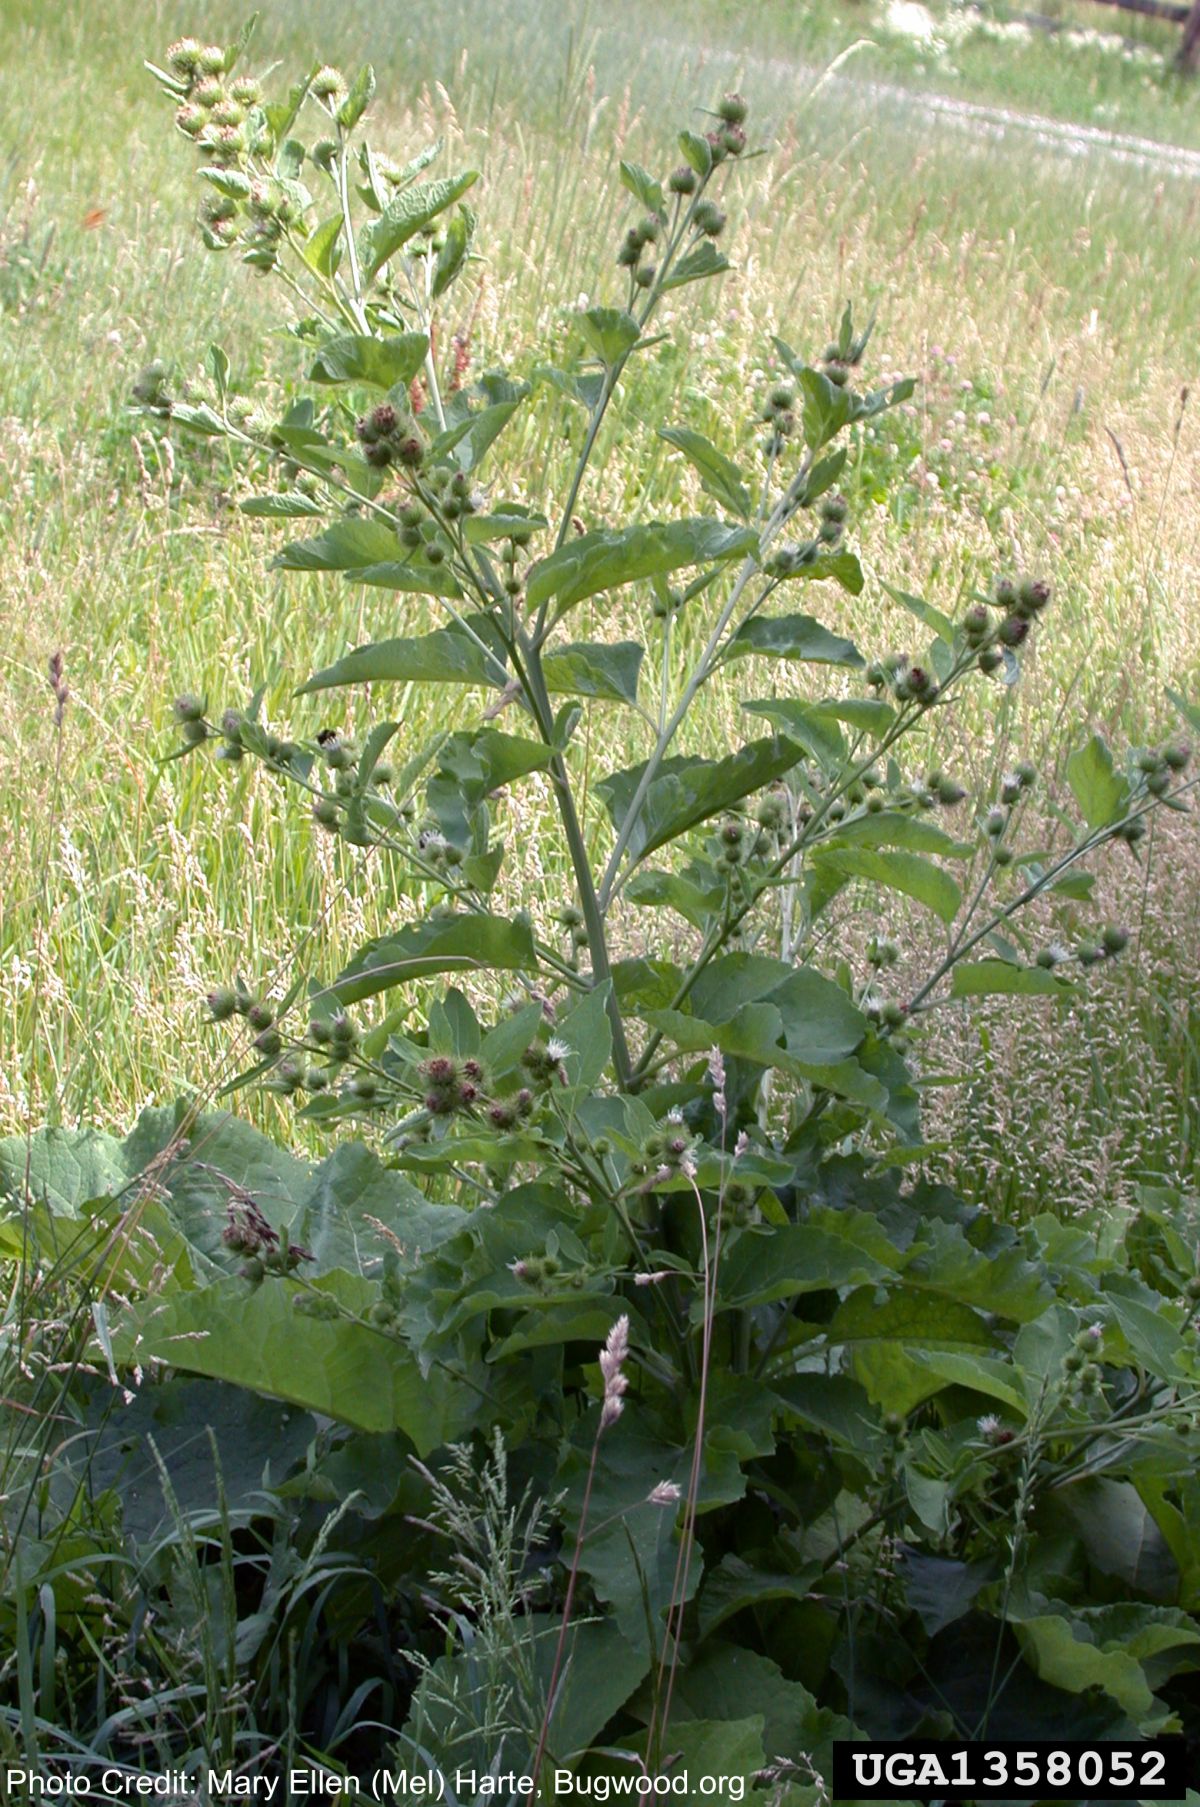 Burdock Species, Arctium Species, invasive plant